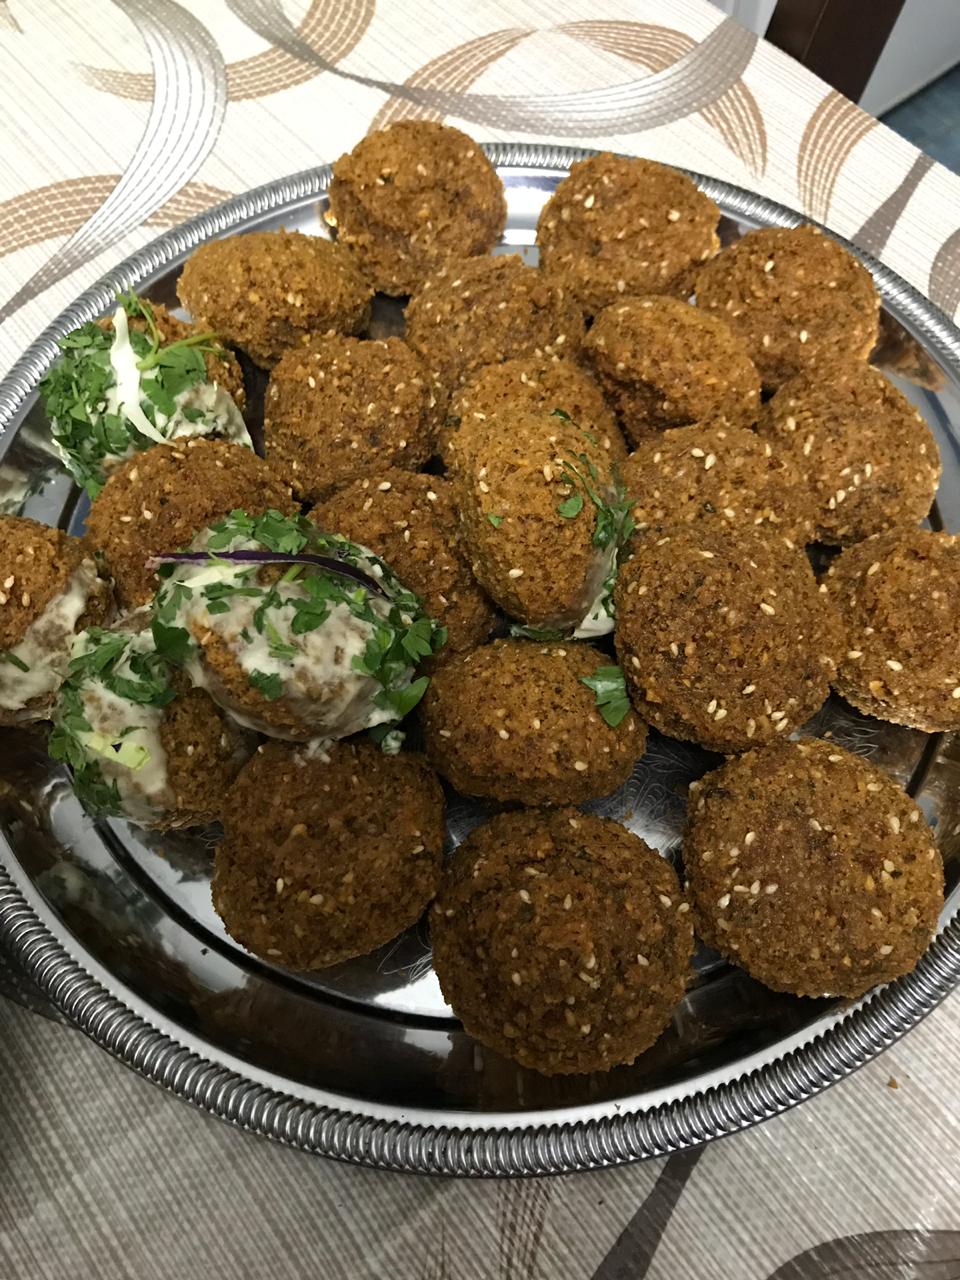 Plate of falafel in Lebanon